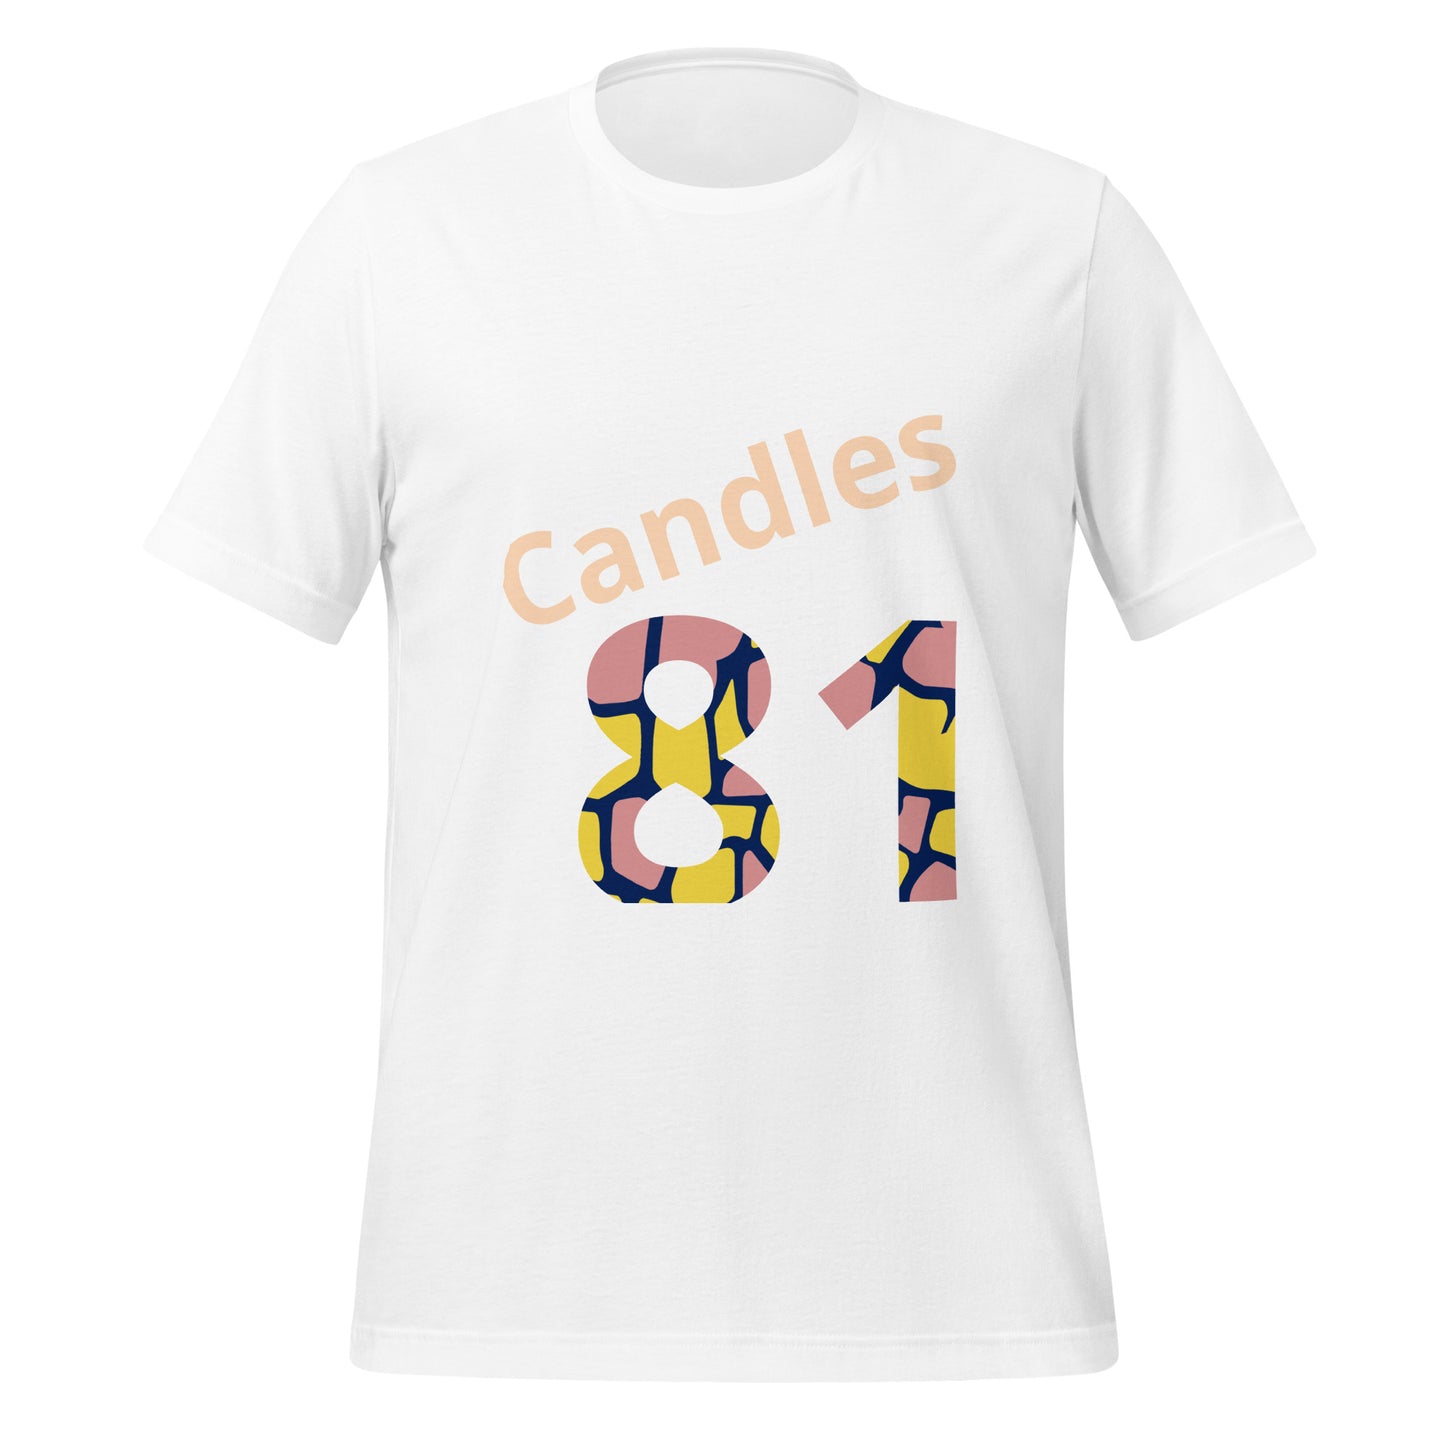 Candles81 t-shirt